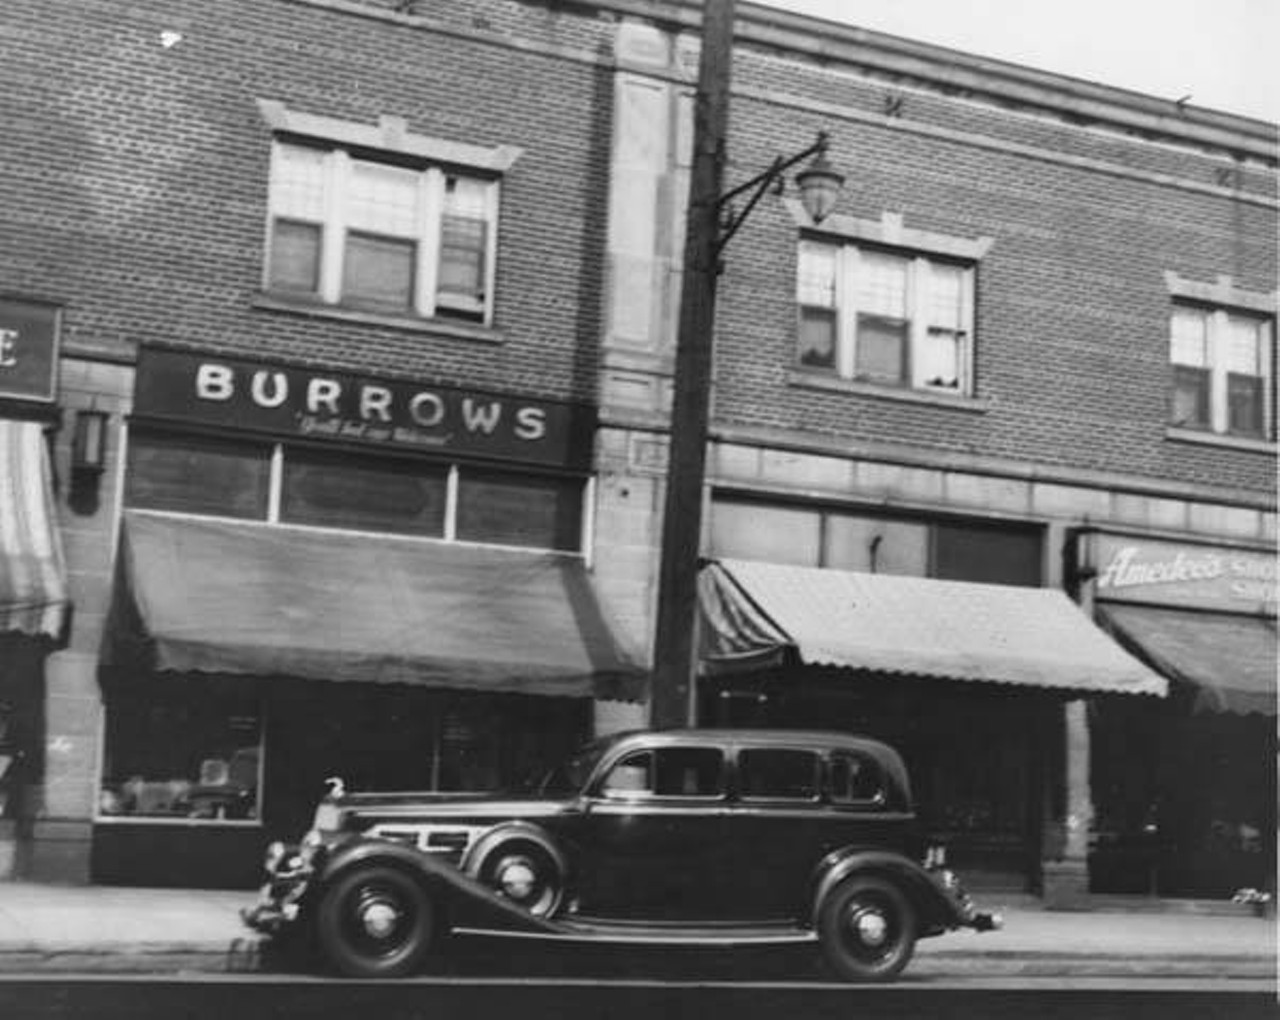  Burrow's & Amedeo's Shoe Shop, 1935 